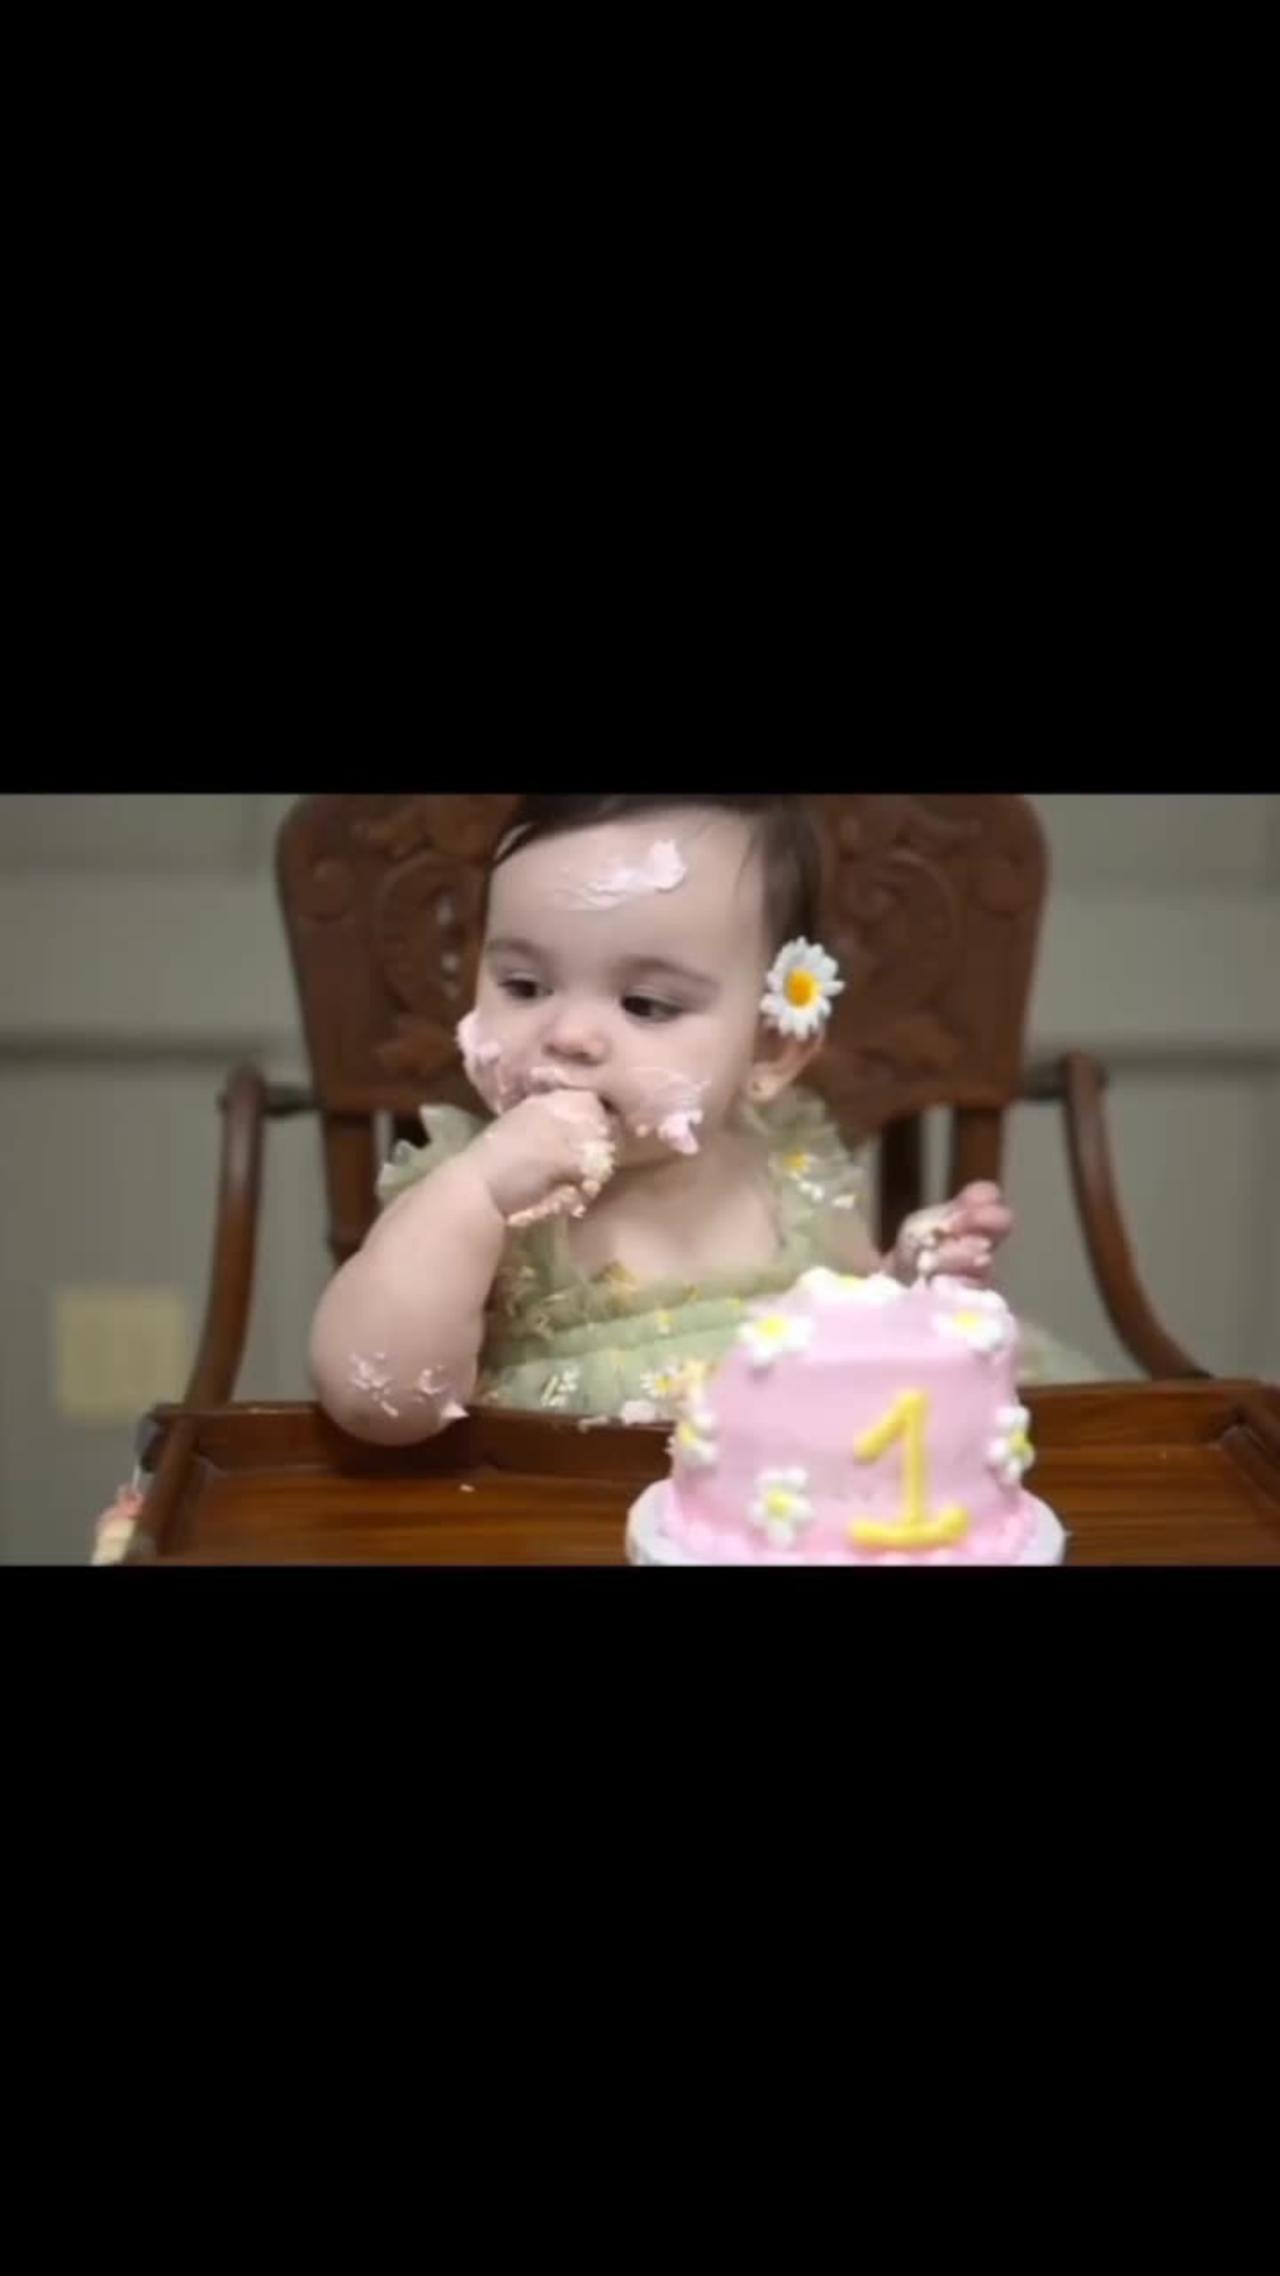 Cute Baby eating cake